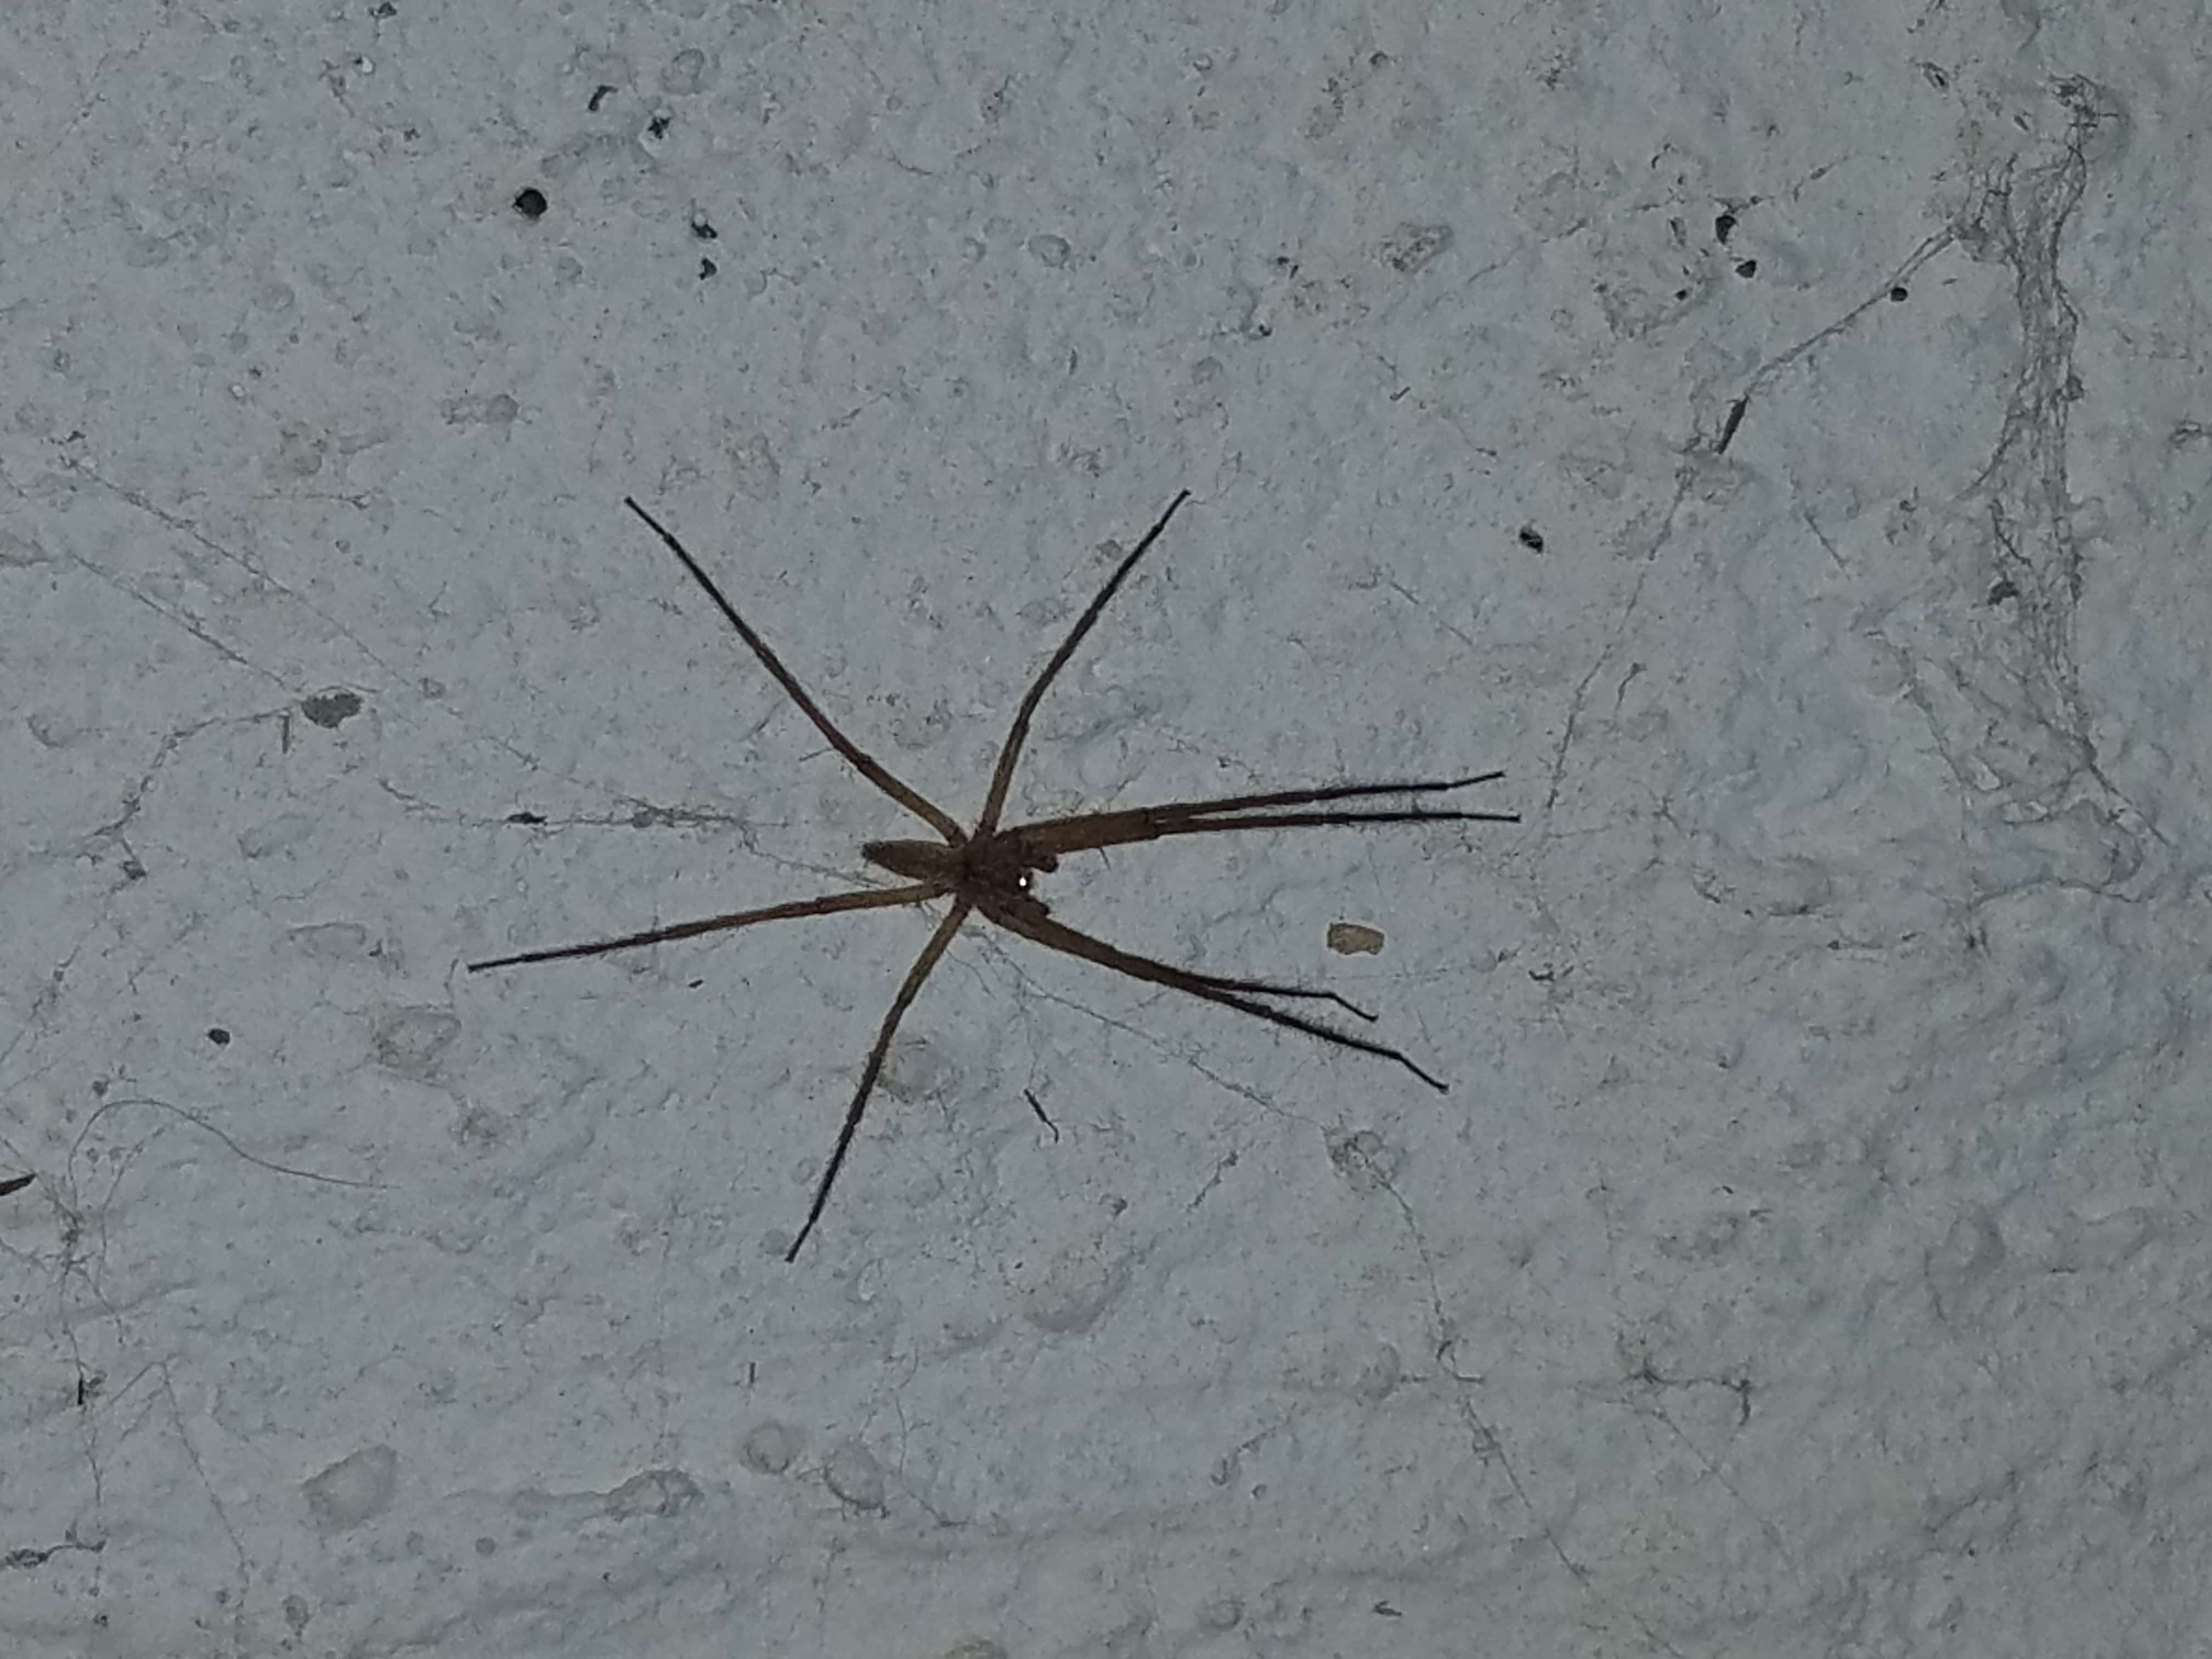 Picture of Pisaurina mira (Nursery Web Spider) - Male - Dorsal